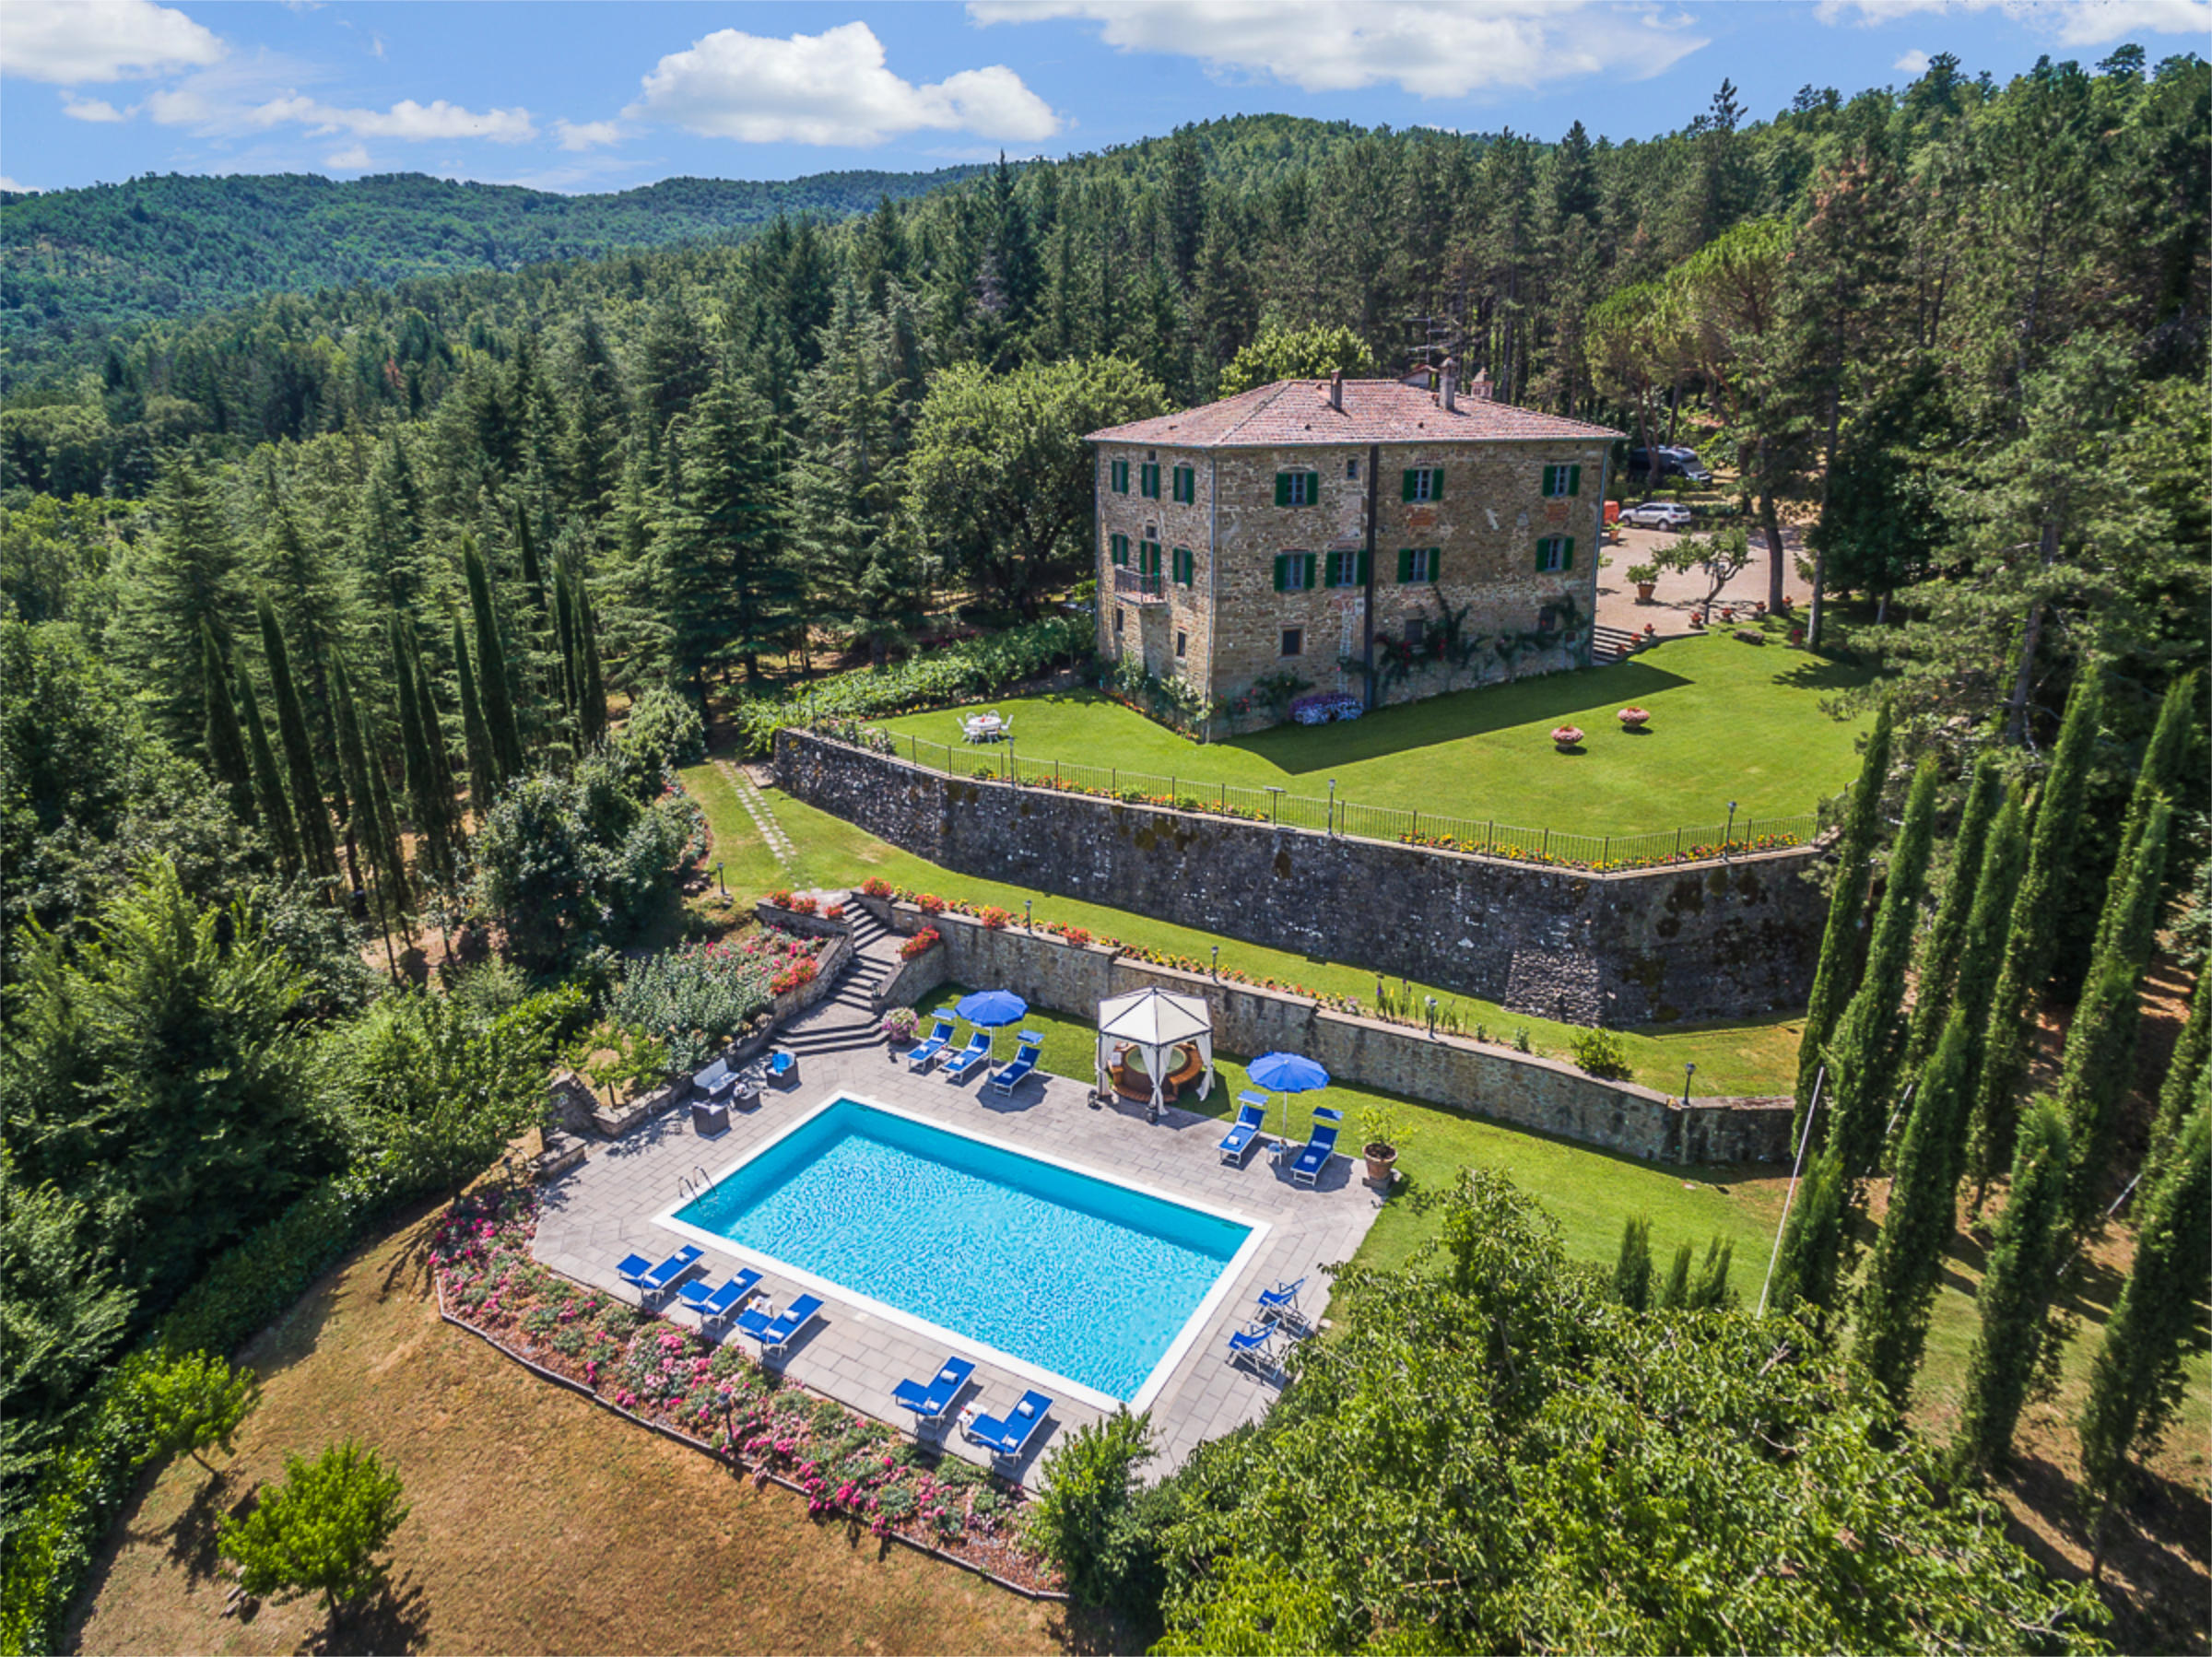 Villa di Monterchi aerial view showing pool and historic palazzo